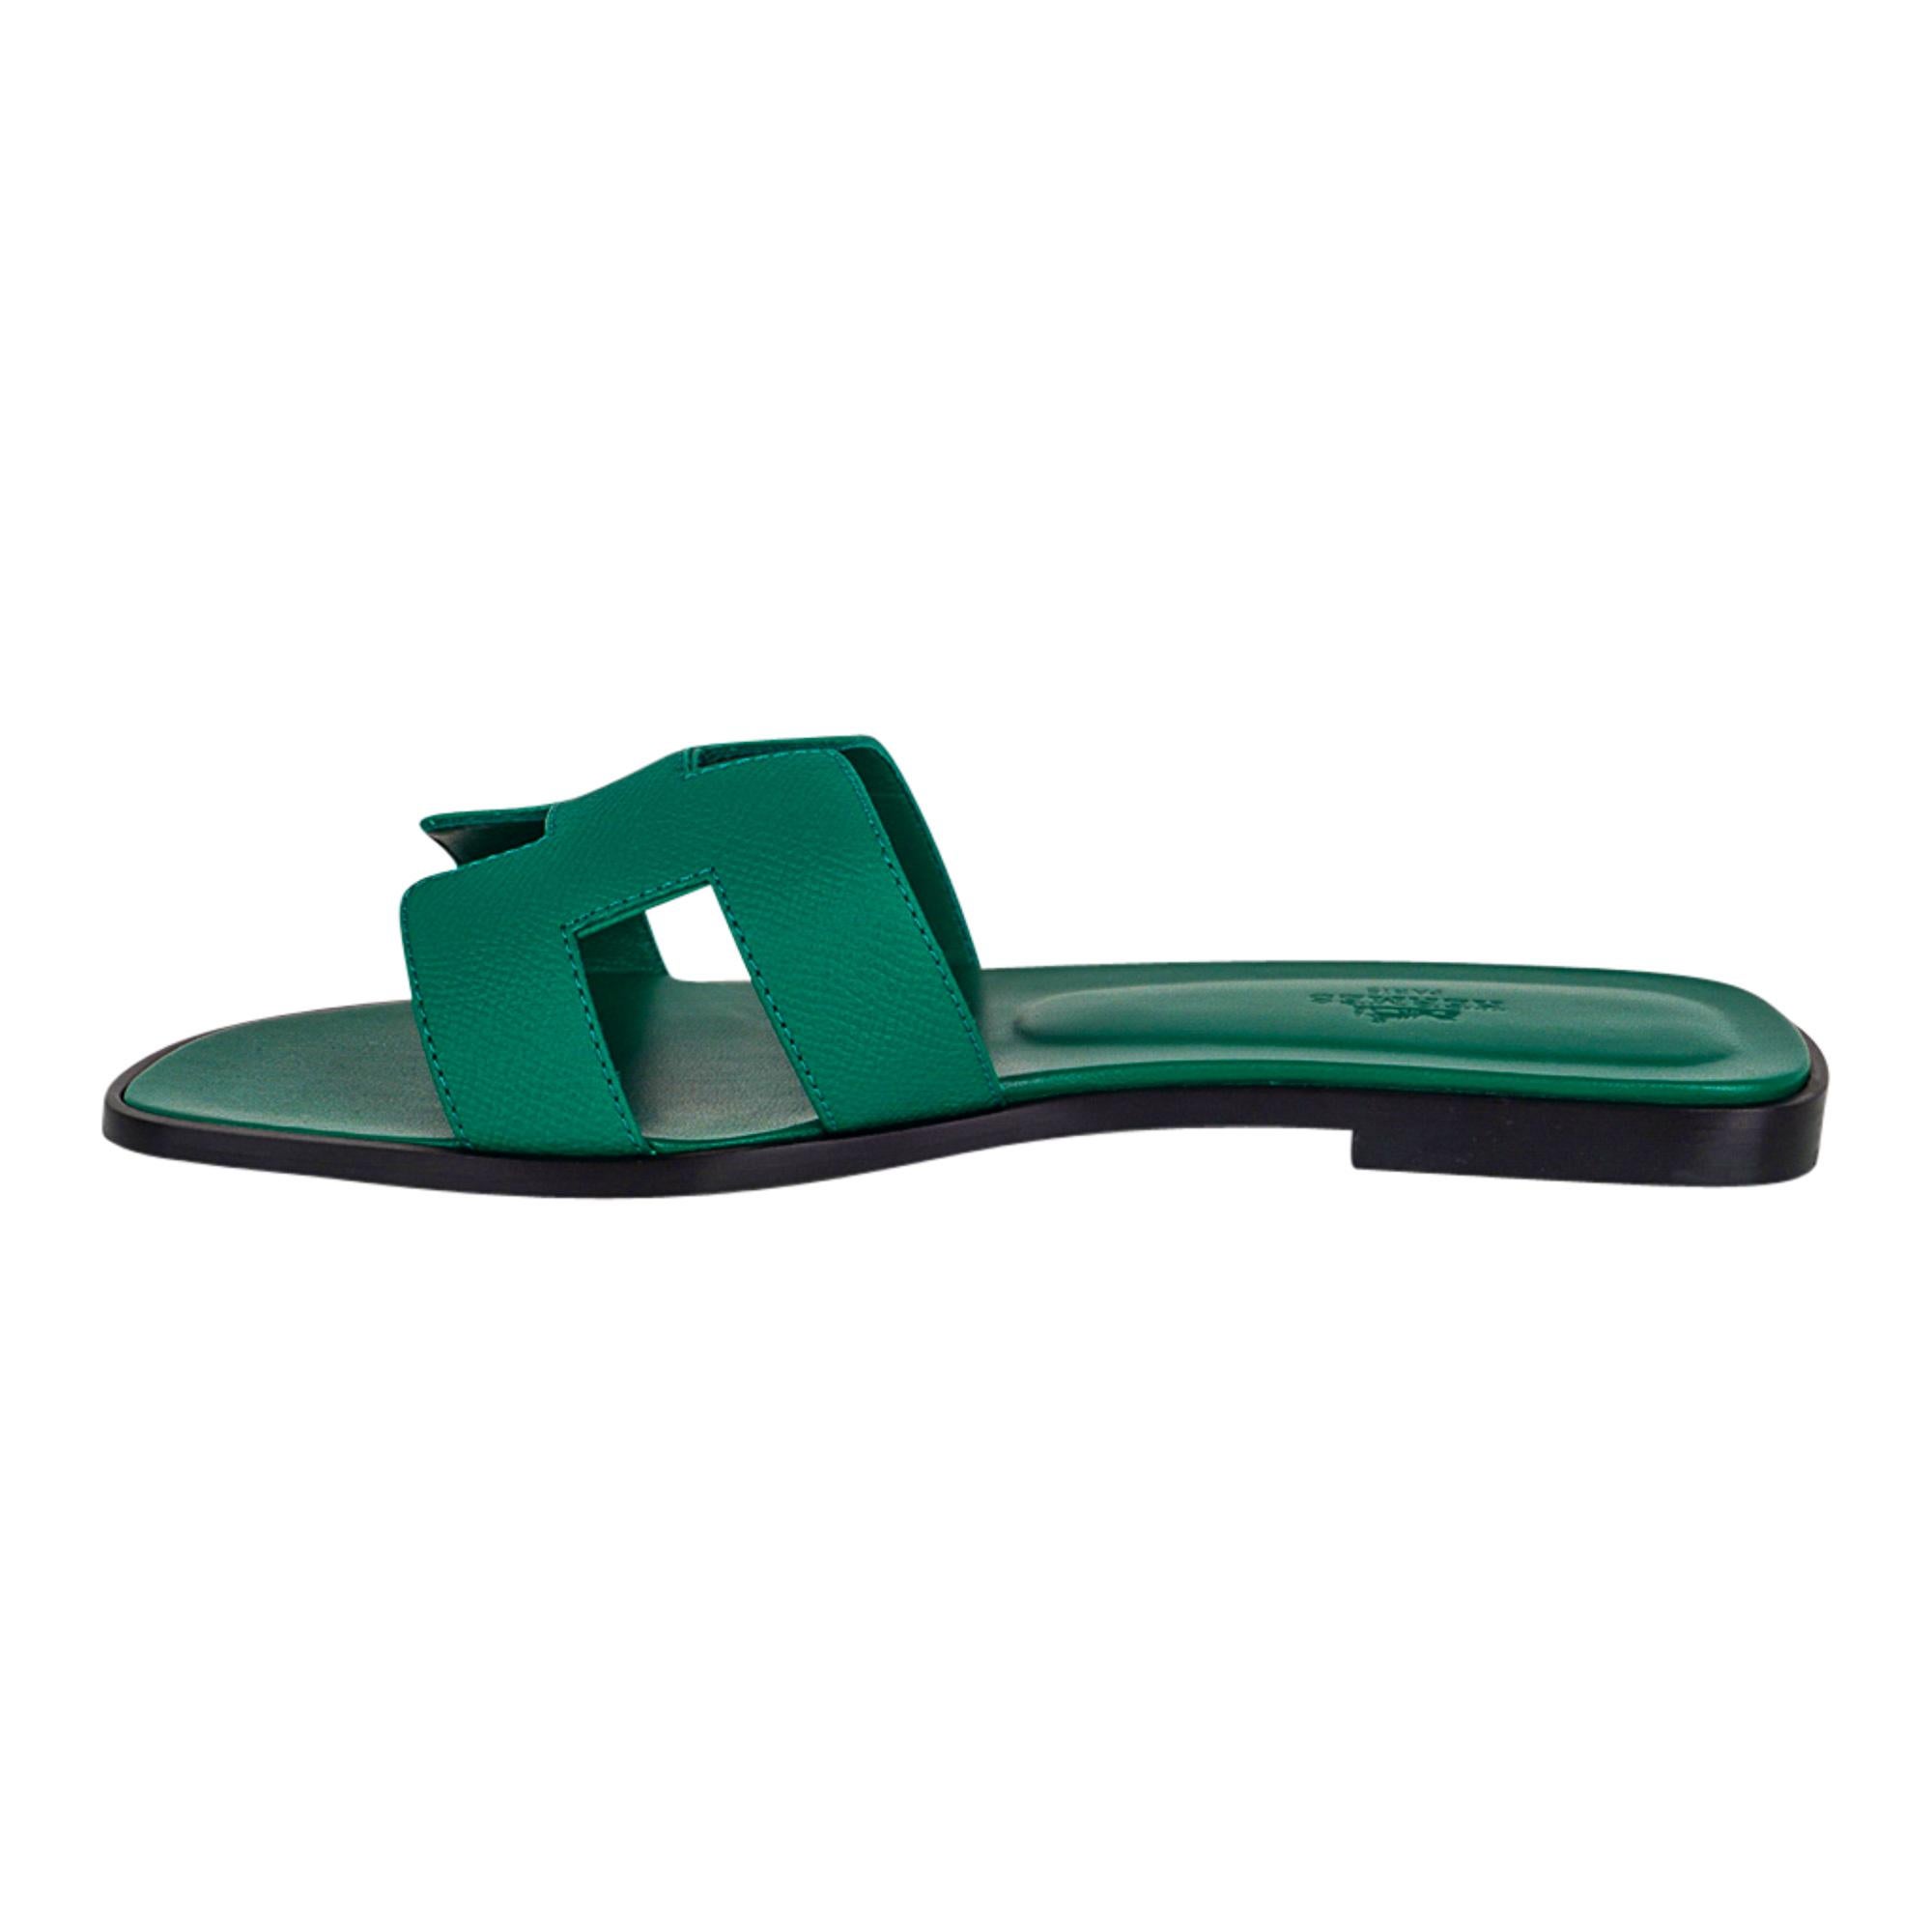 Blue Hermes Emerald Oran Sandal Epsom Leather Flat Shoes 38.5 / 8.5 New w/ Box